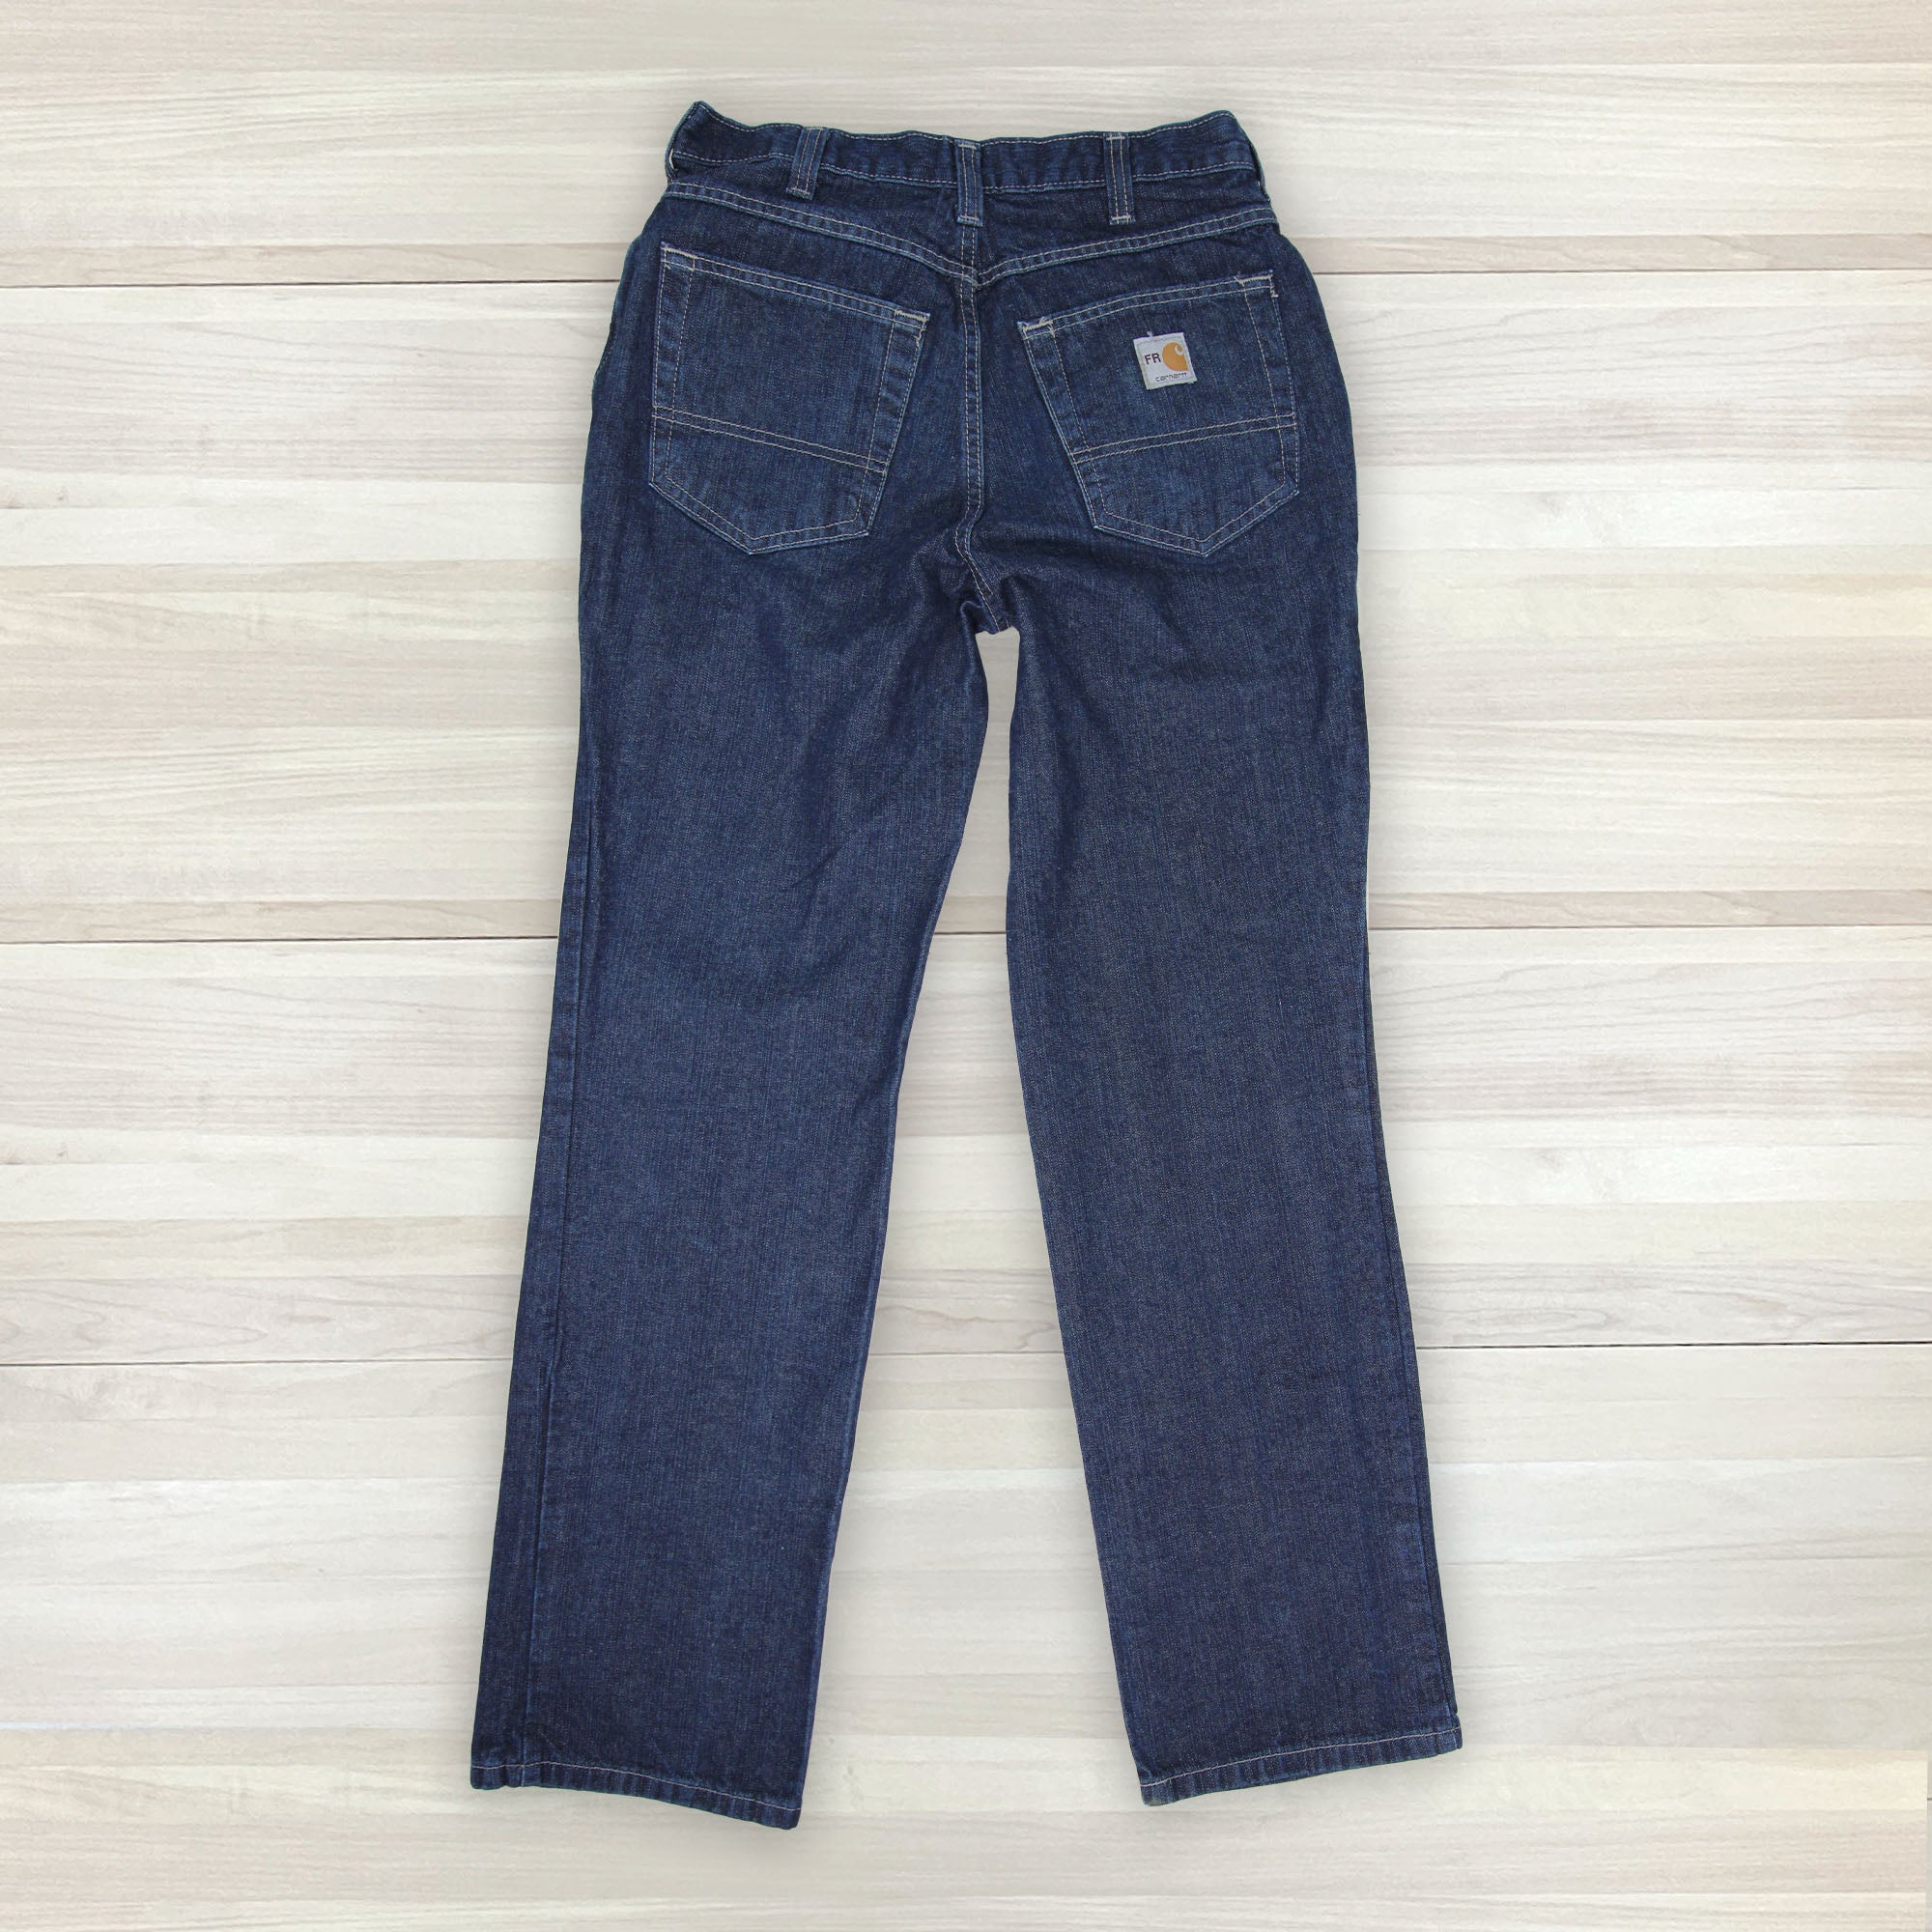 Men's Carhartt FR Flame Resistant Jeans - Measures 28x31 - 0